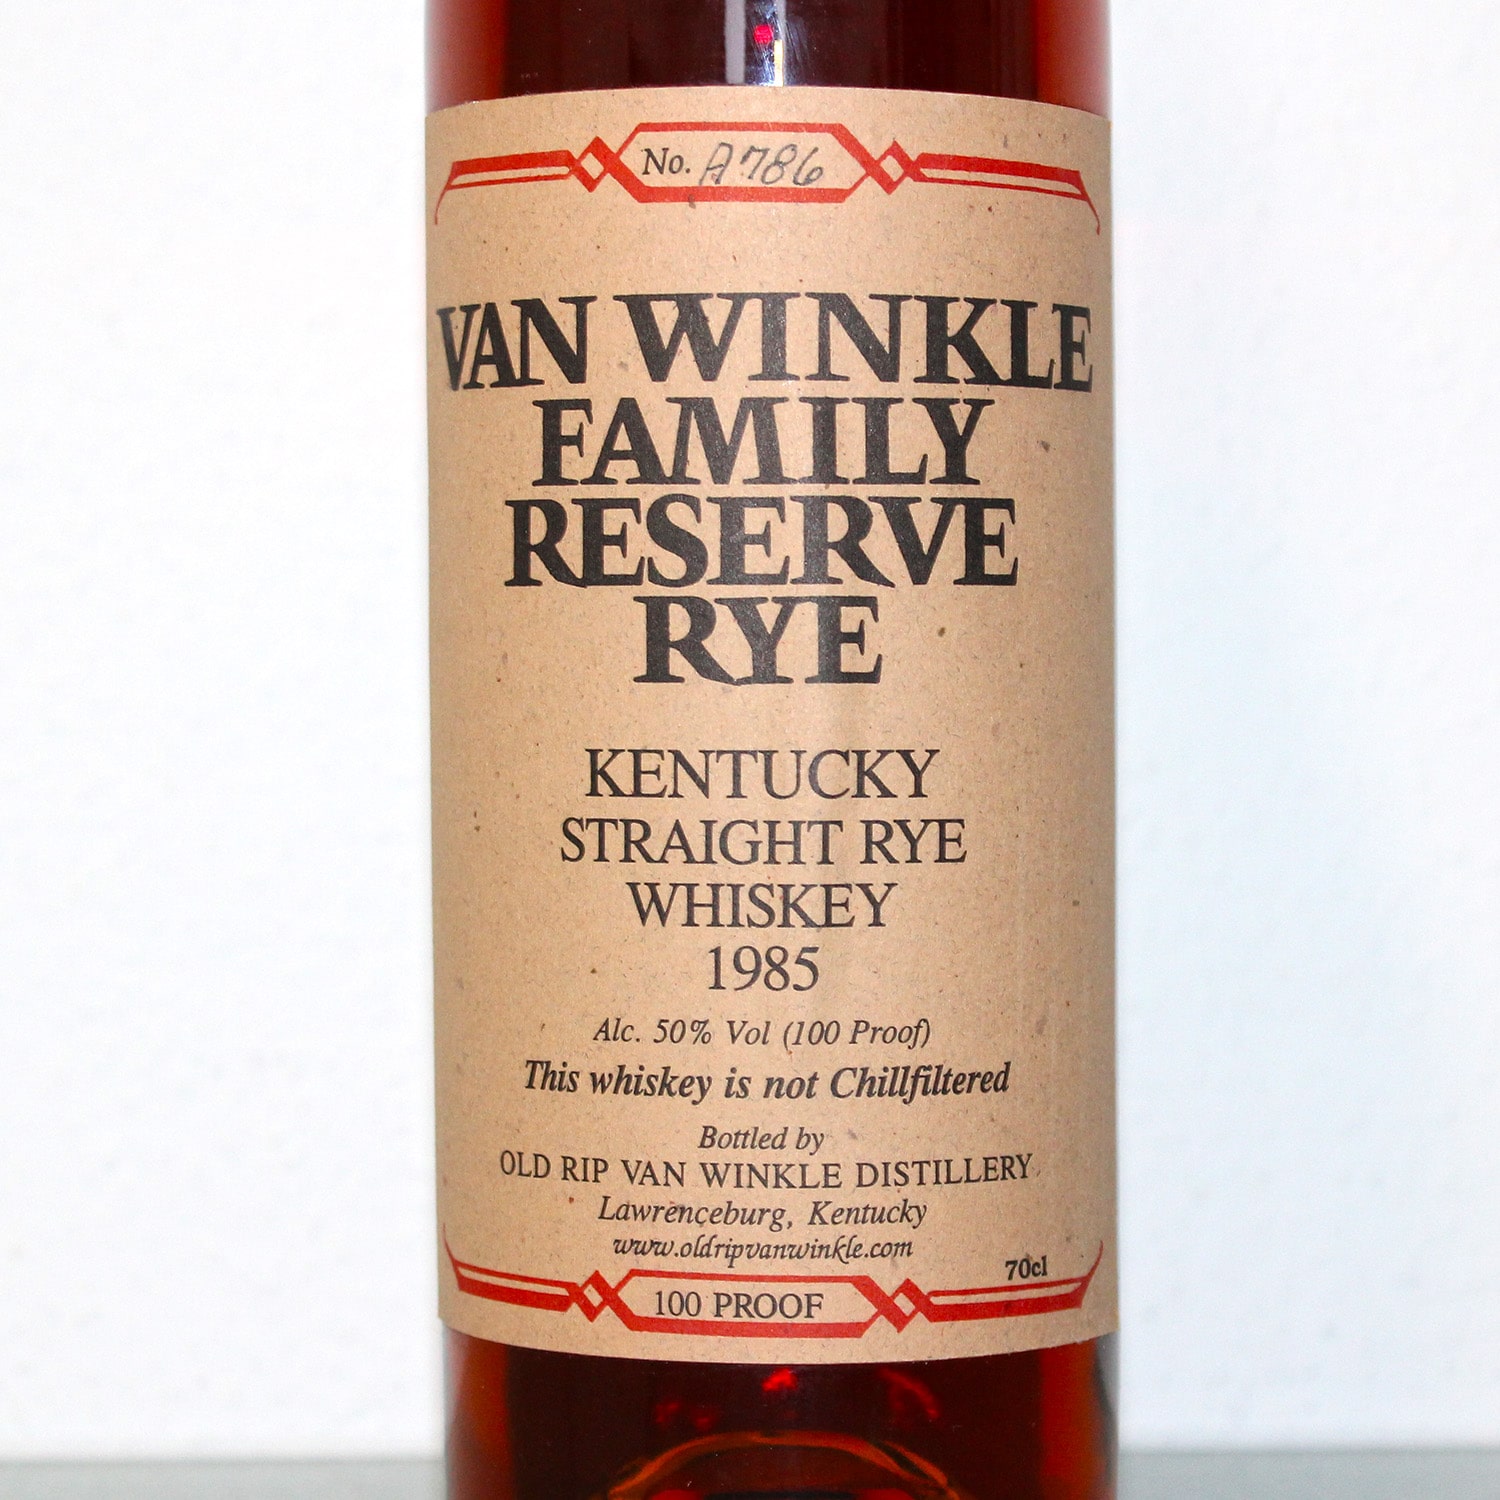 Van Winkle Family Reserve Rye 1985 label